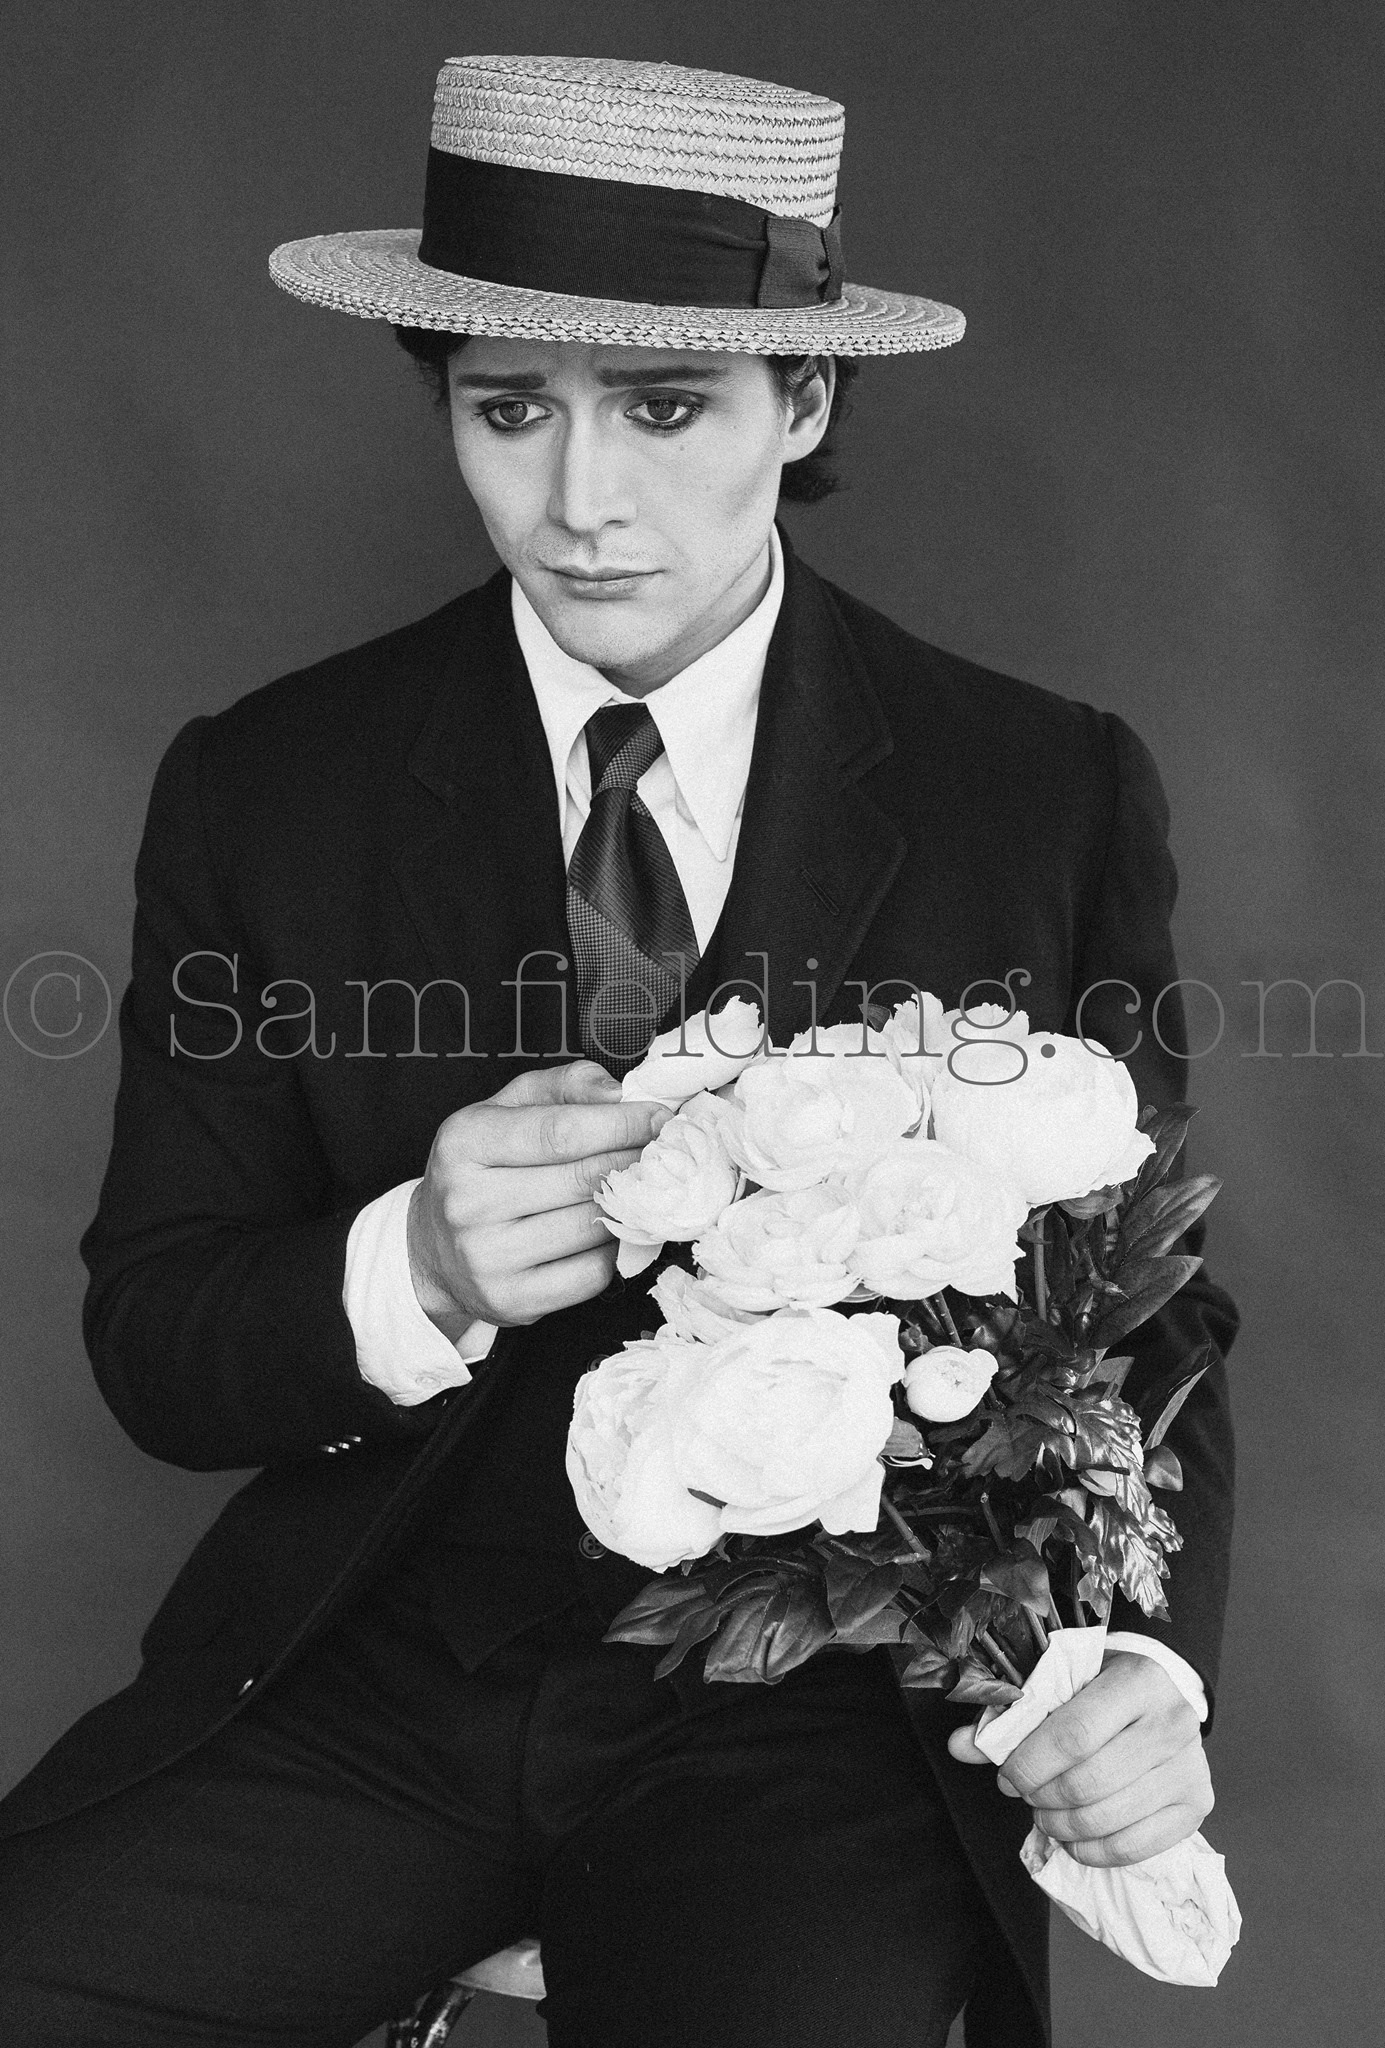 David as Buster Keaton